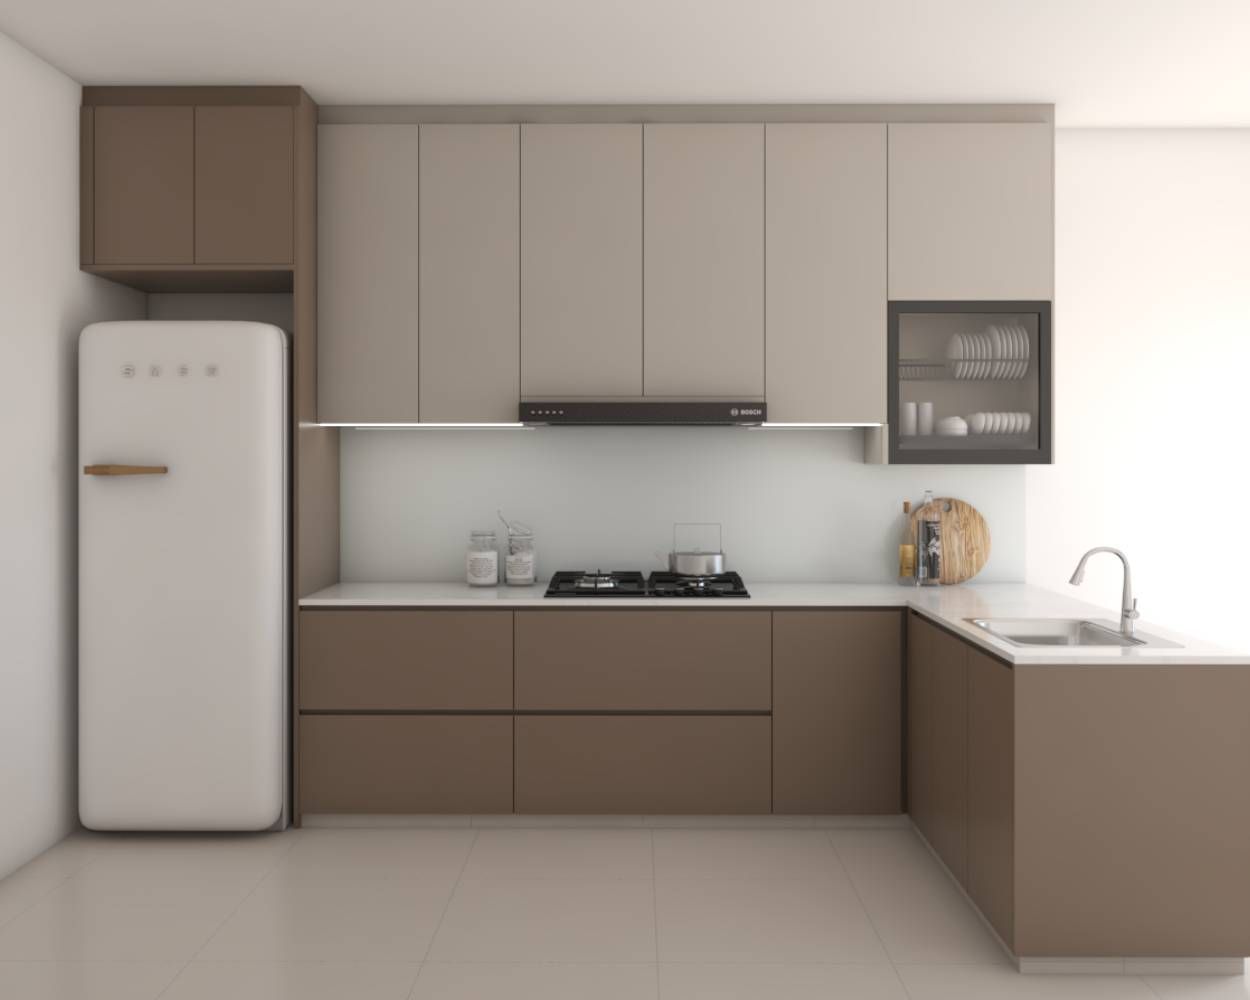 Contemporary Light Brown And Dark Brown L-Shaped Kitchen Design With White Backsplash